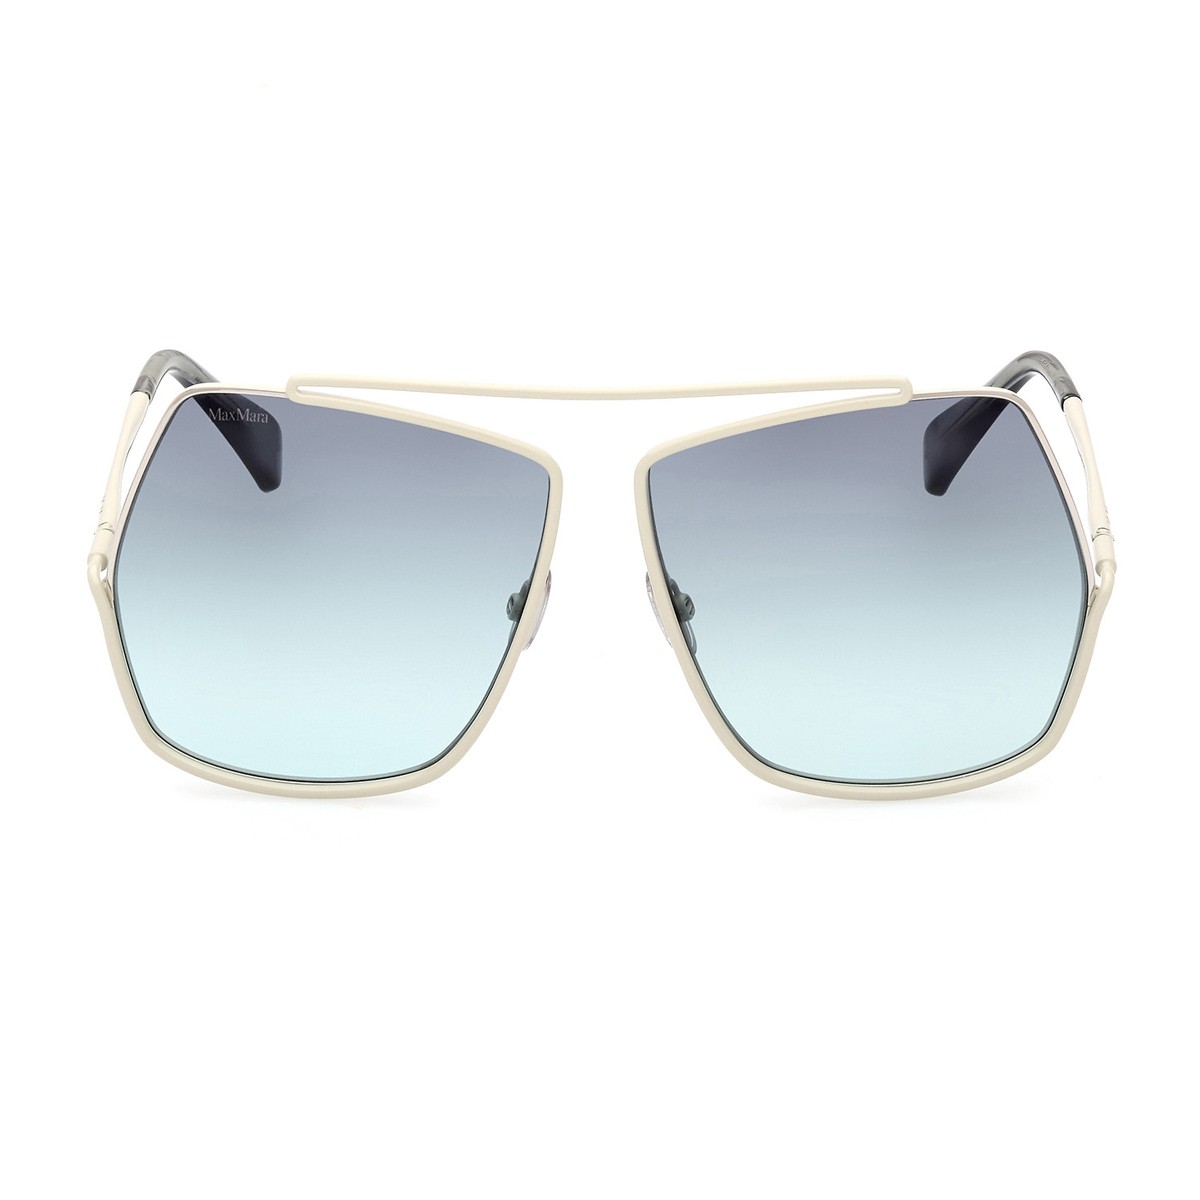 Max Mara sunglasses and eyewear for women | OtticaLucciola.net